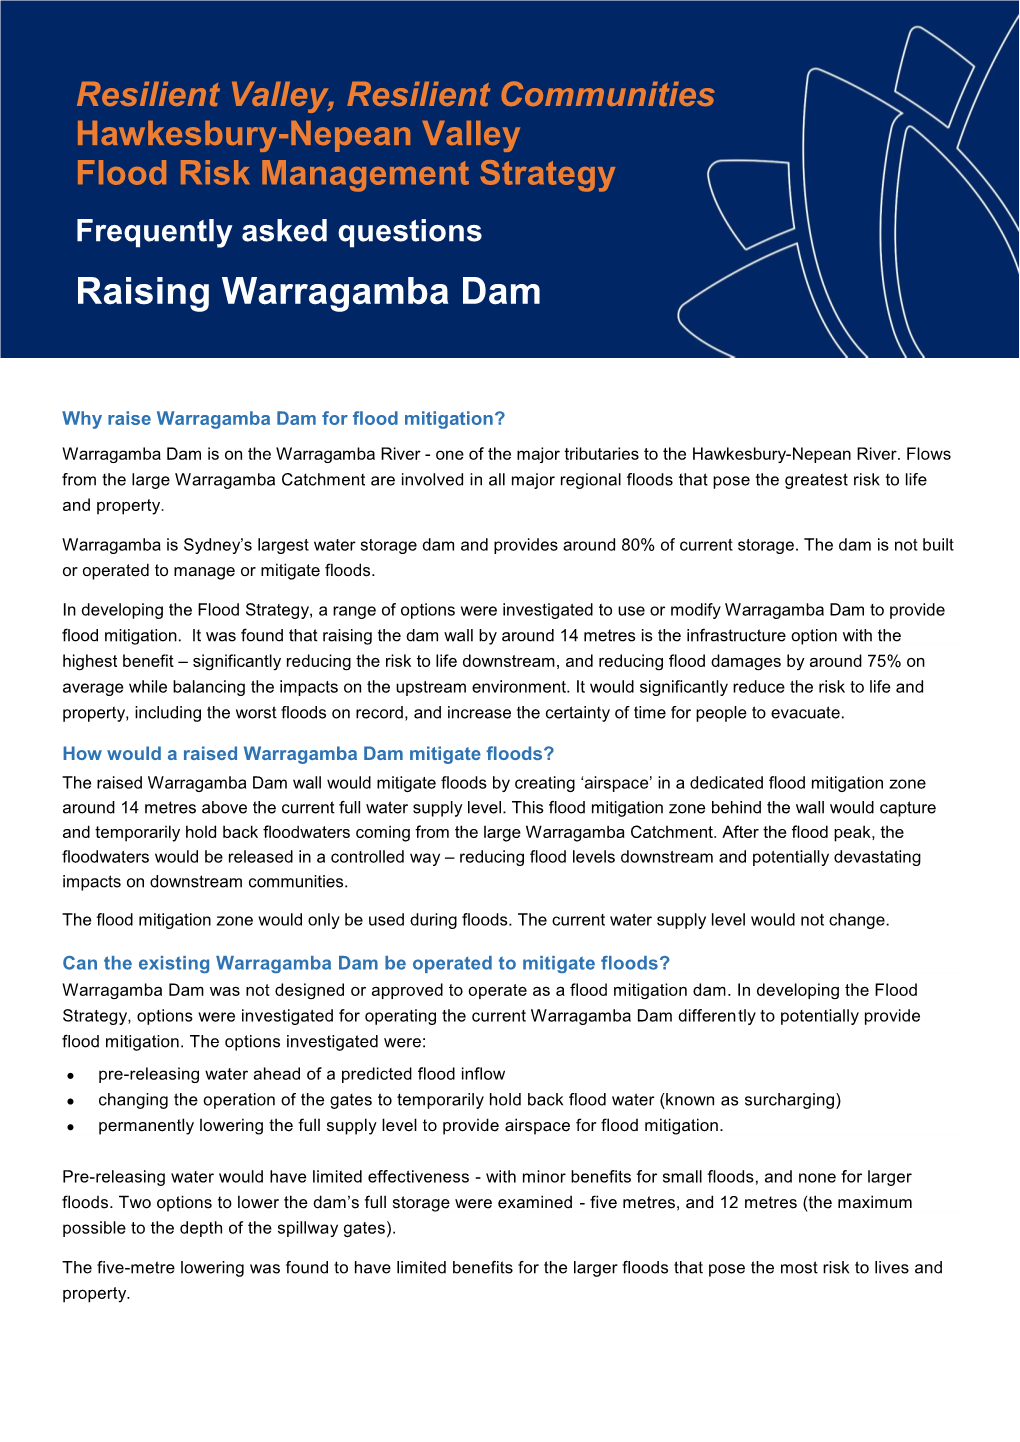 Raising Warragamba Dam